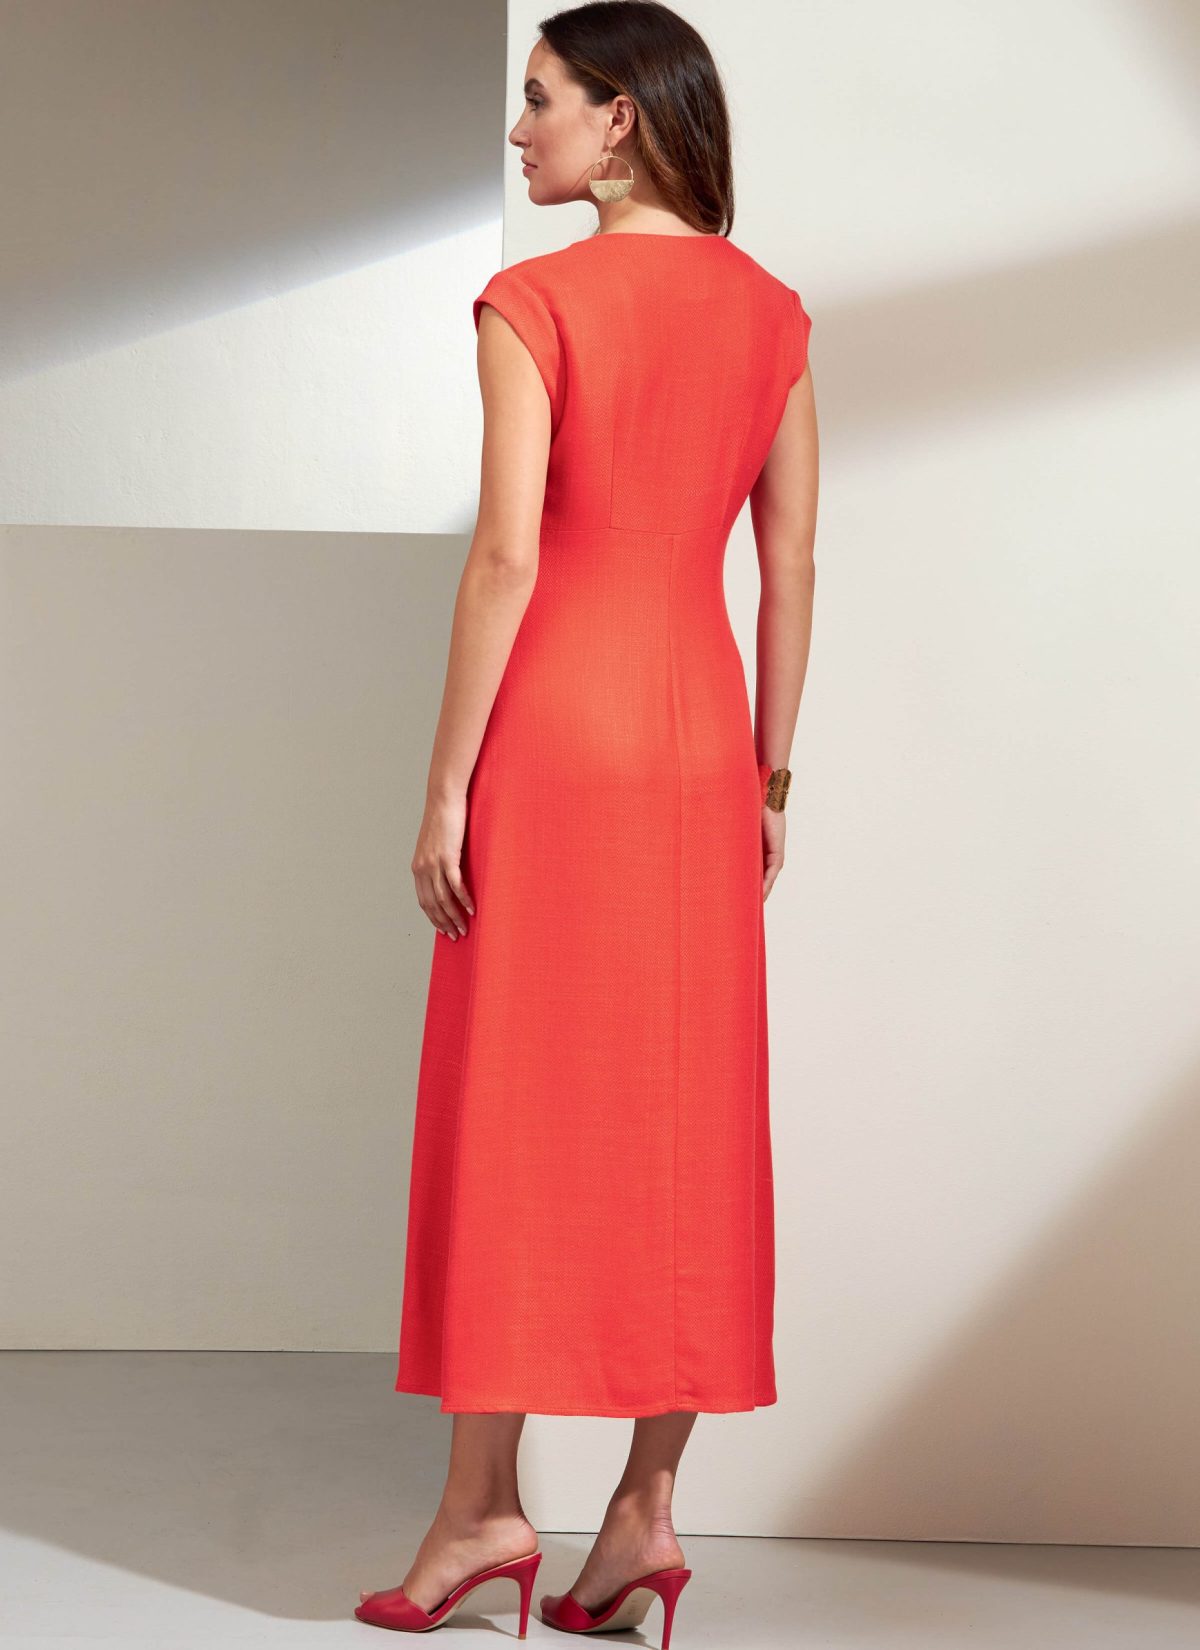 Vogue Patterns V1859 Rachel Comey Misses' Dress